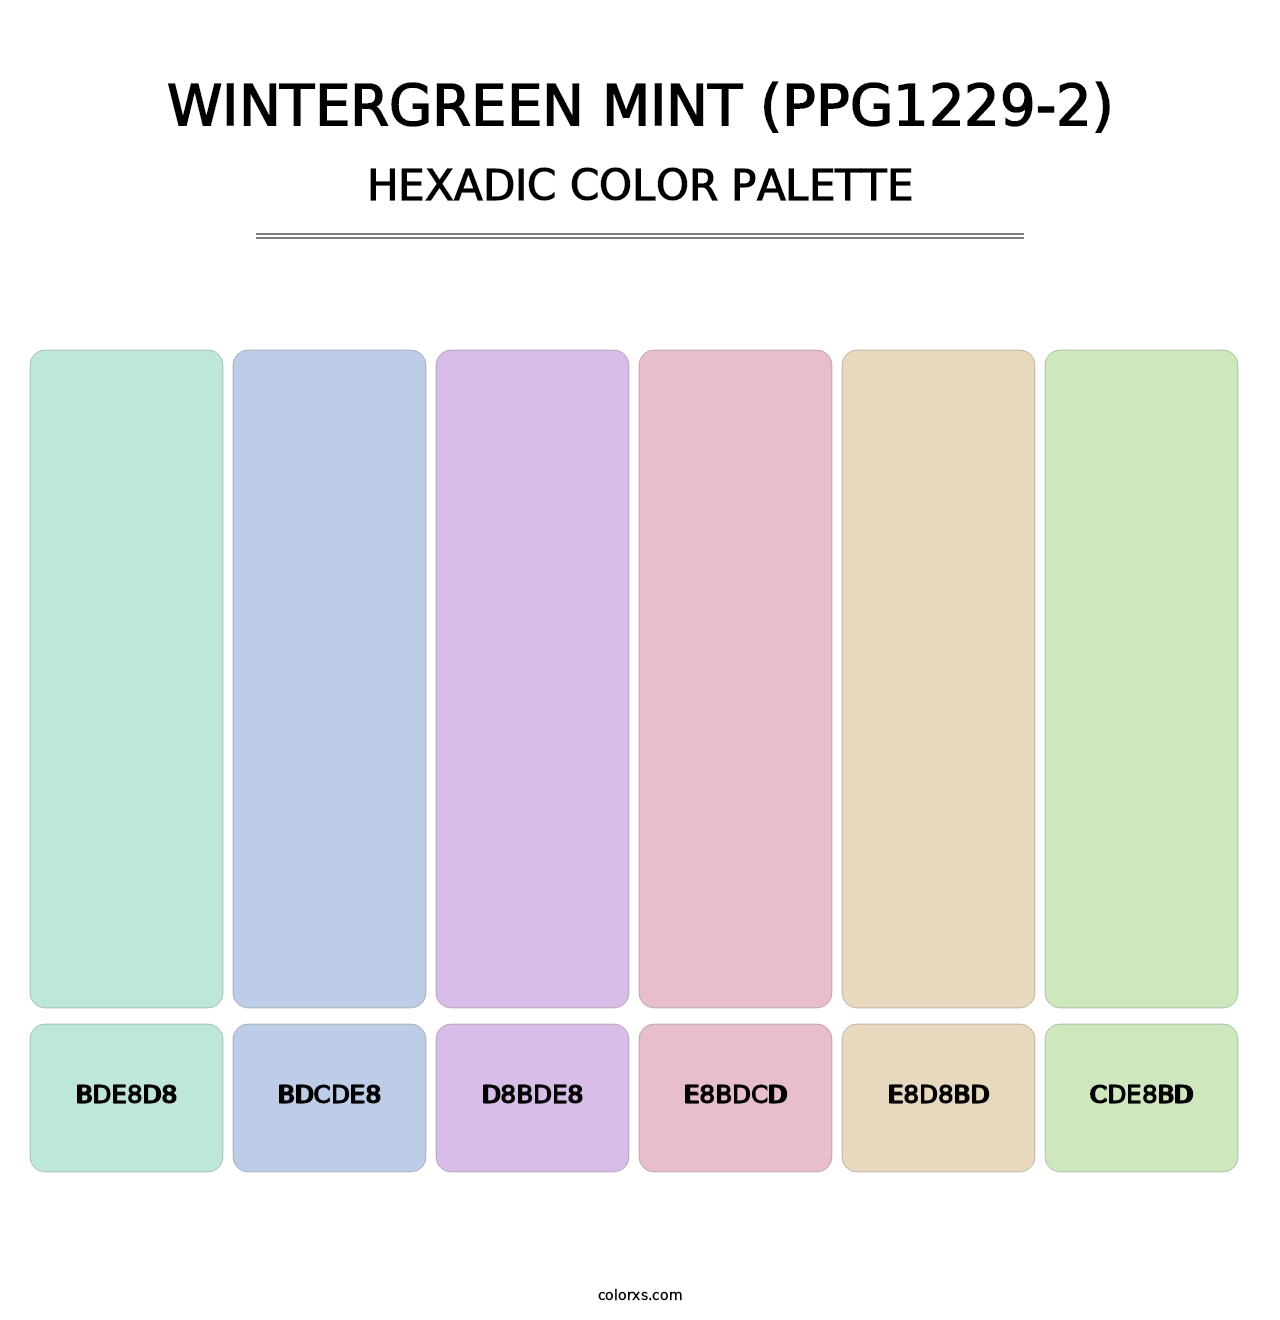 Wintergreen Mint (PPG1229-2) - Hexadic Color Palette